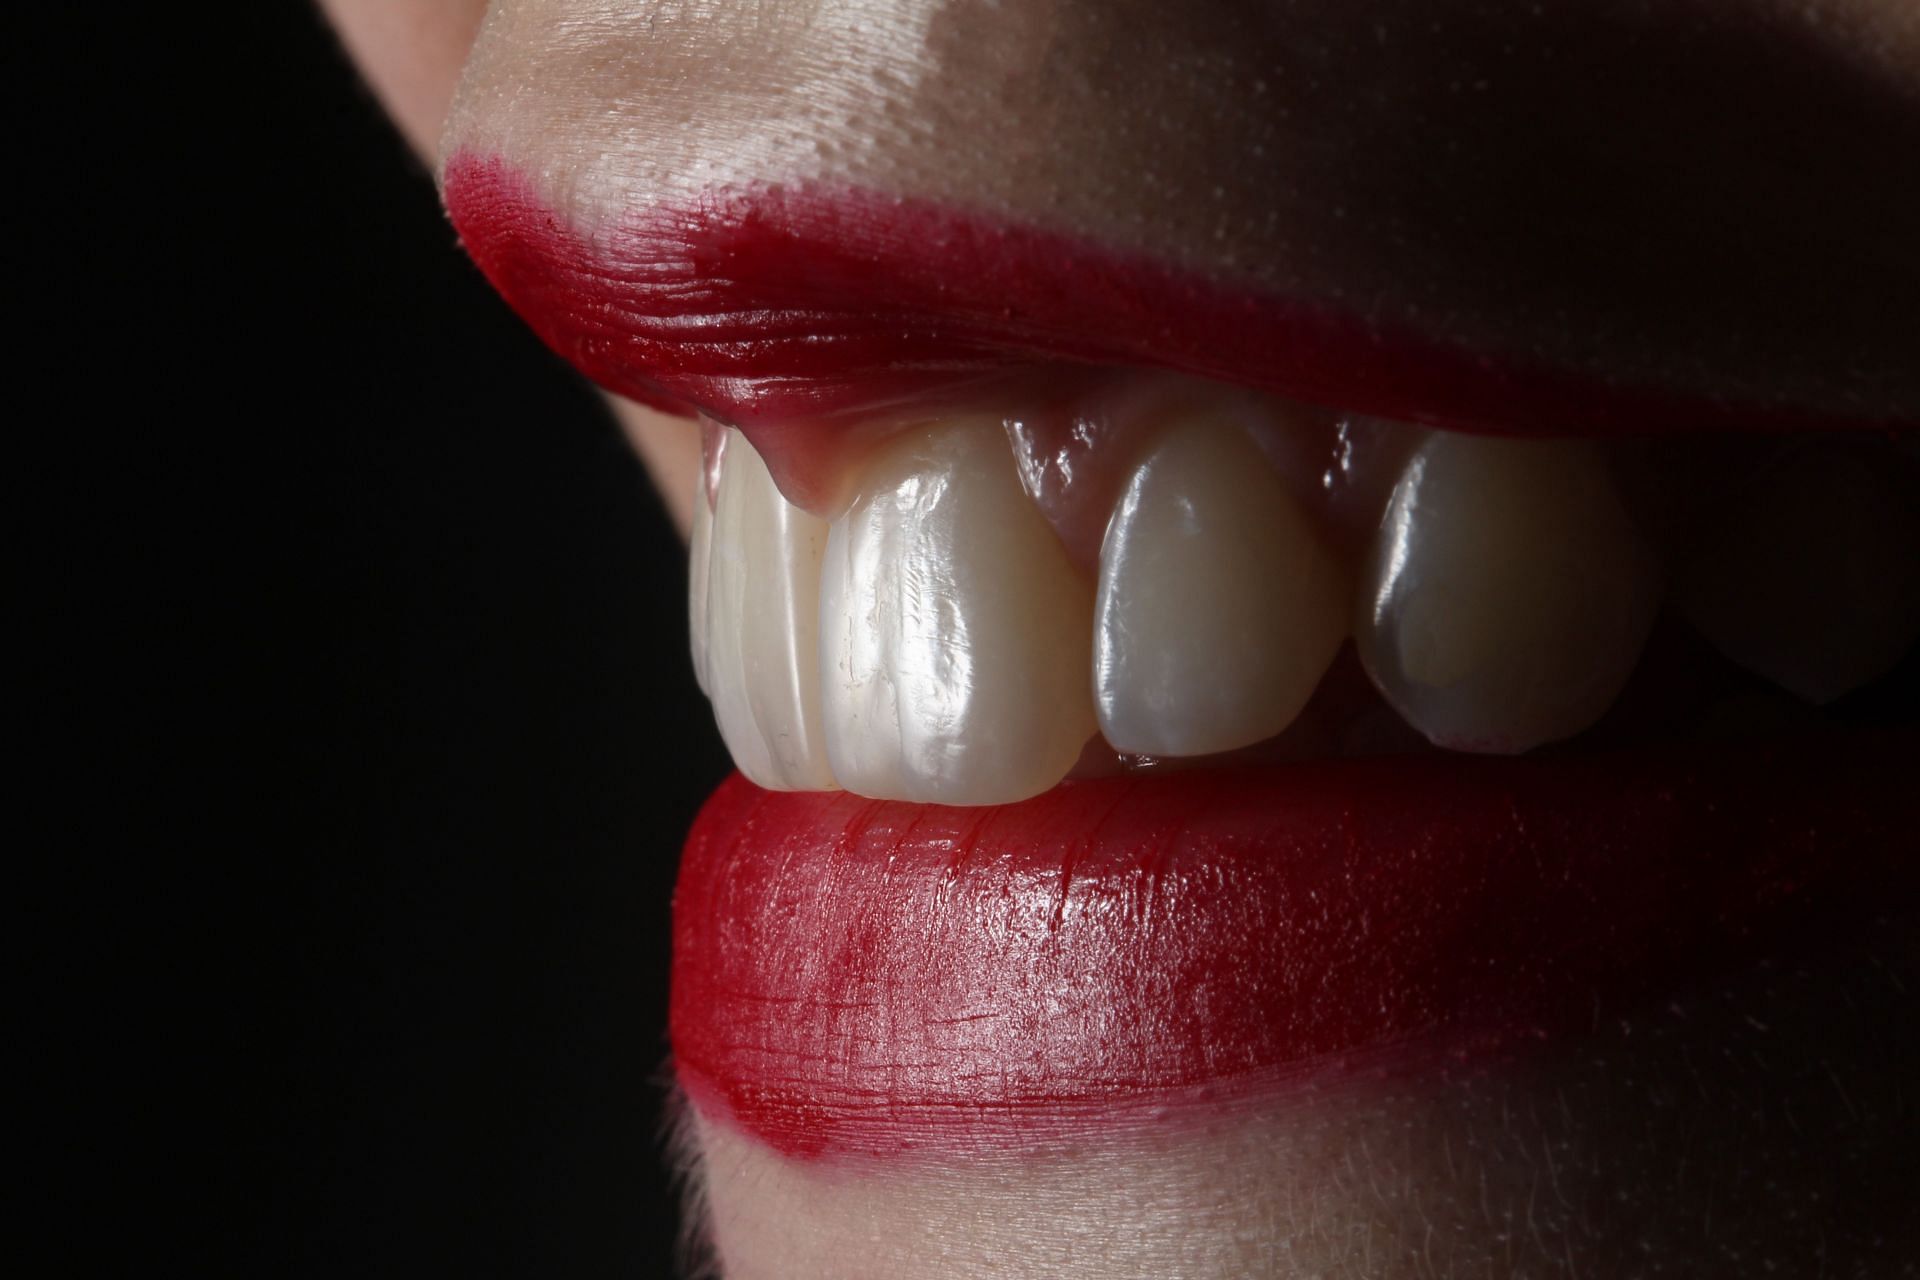 Bright white teeth (Image via Unsplash/Rafael)